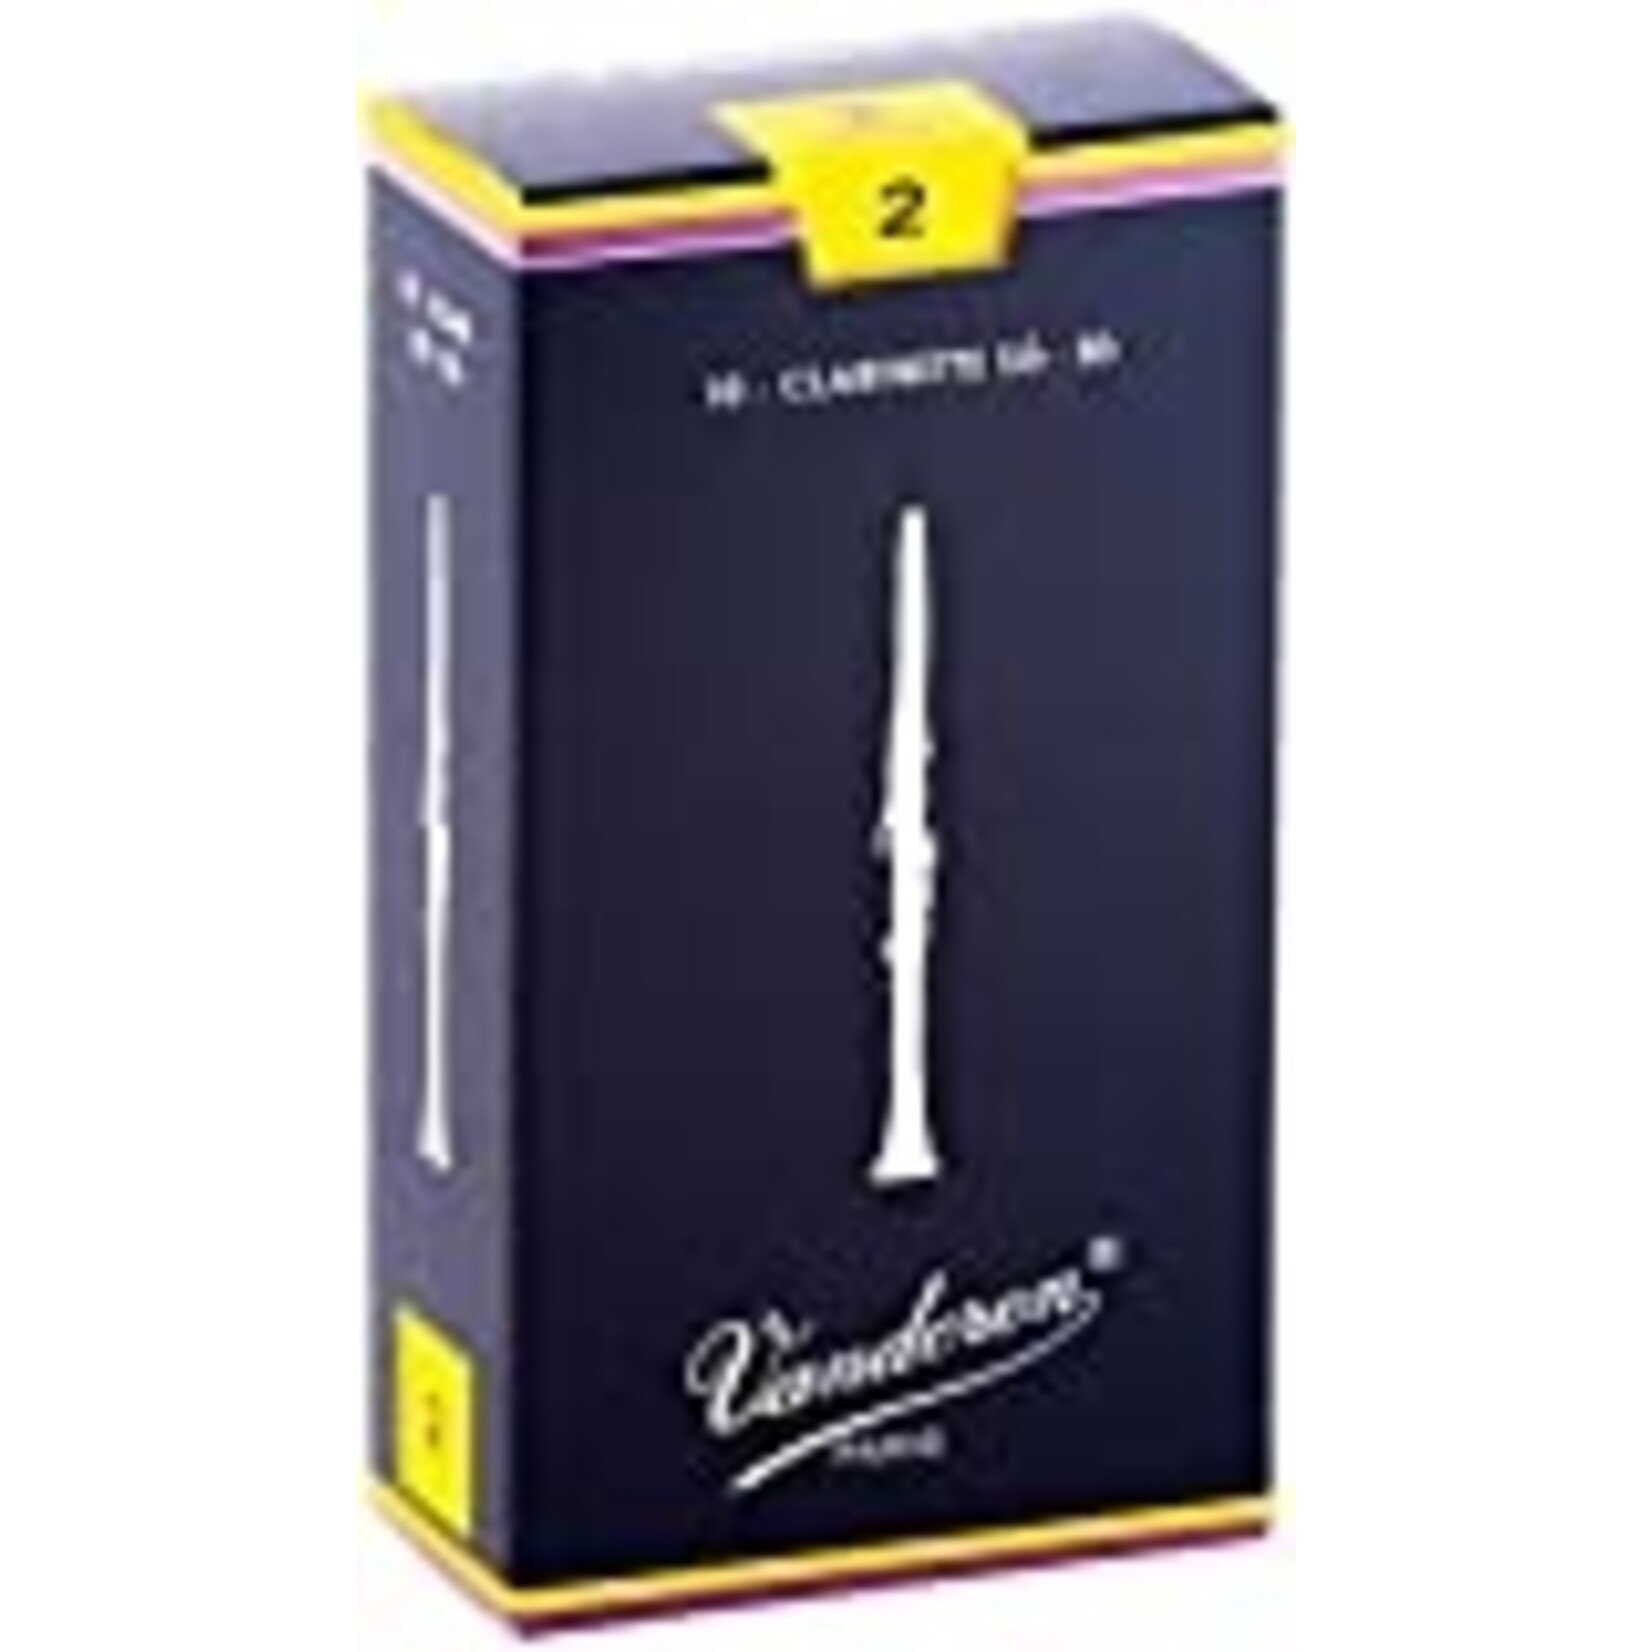 Vandoren Bb Clarinet Reeds 2 - (Box of 10)